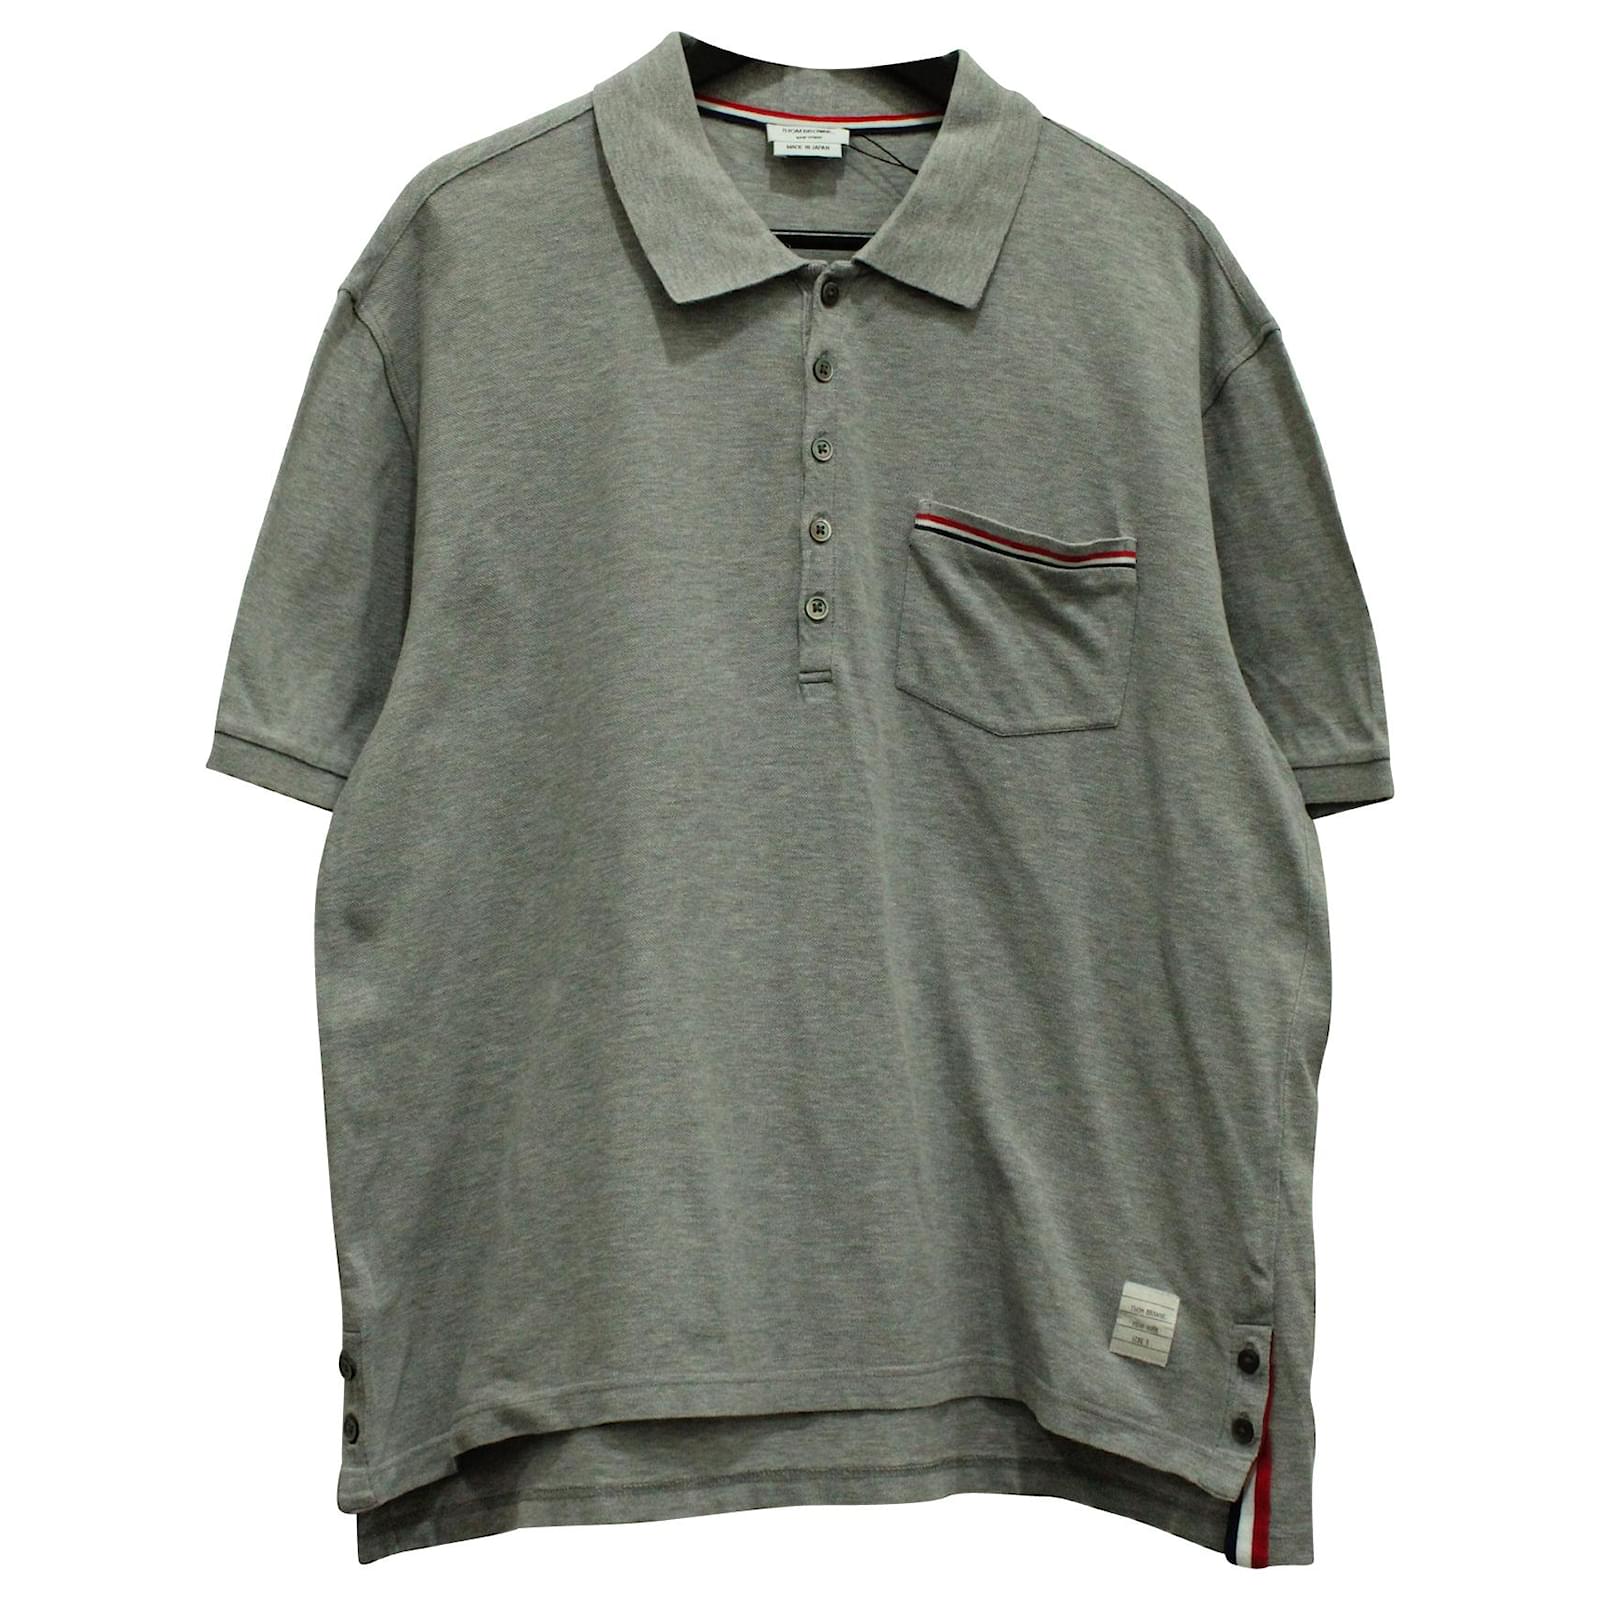 4 Bar Striped Cotton Polo Shirt in Multicoloured - Thom Browne